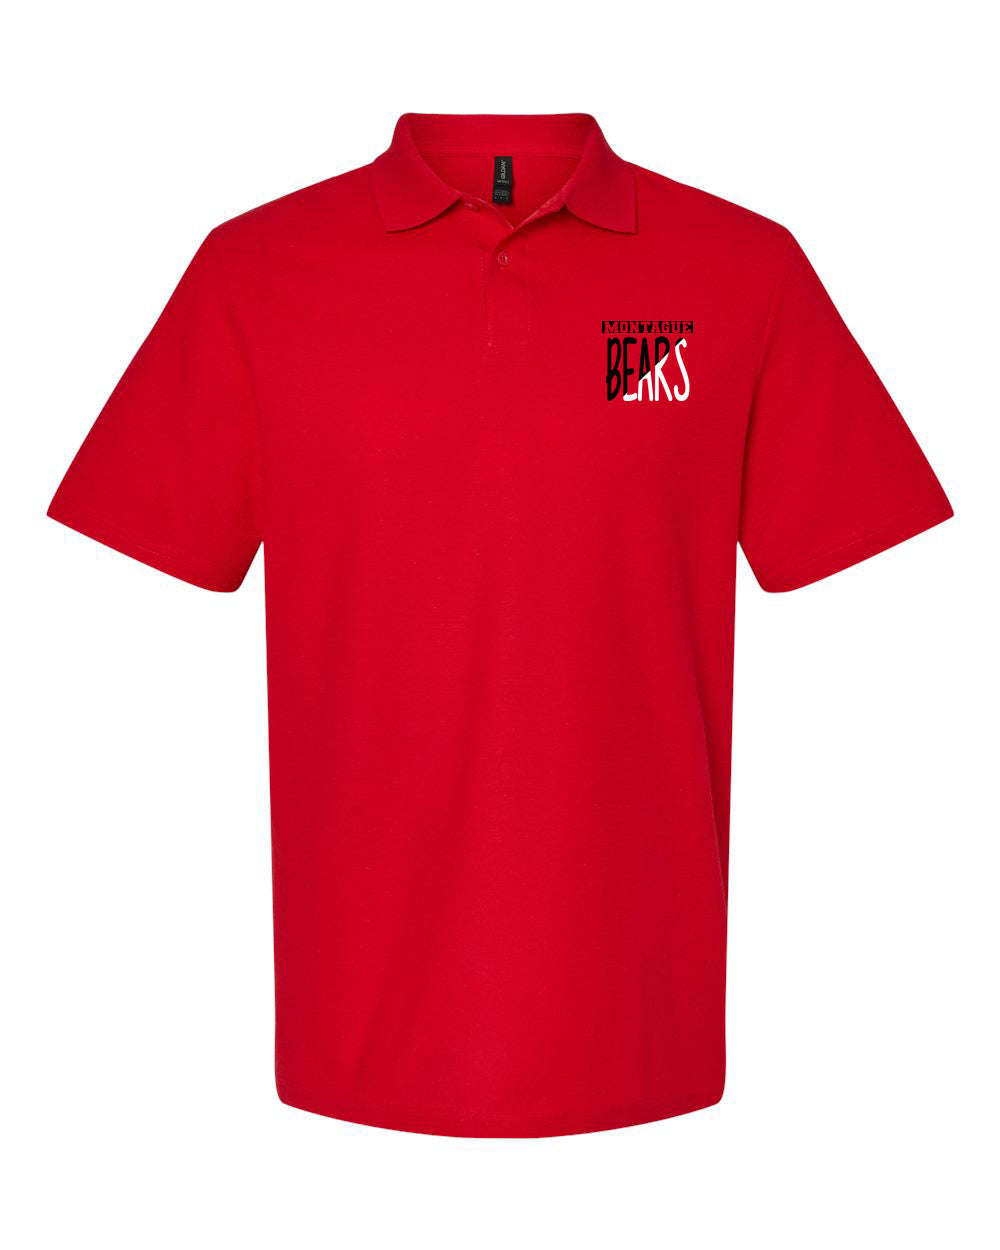 Montague Design 7 Polo T-Shirt